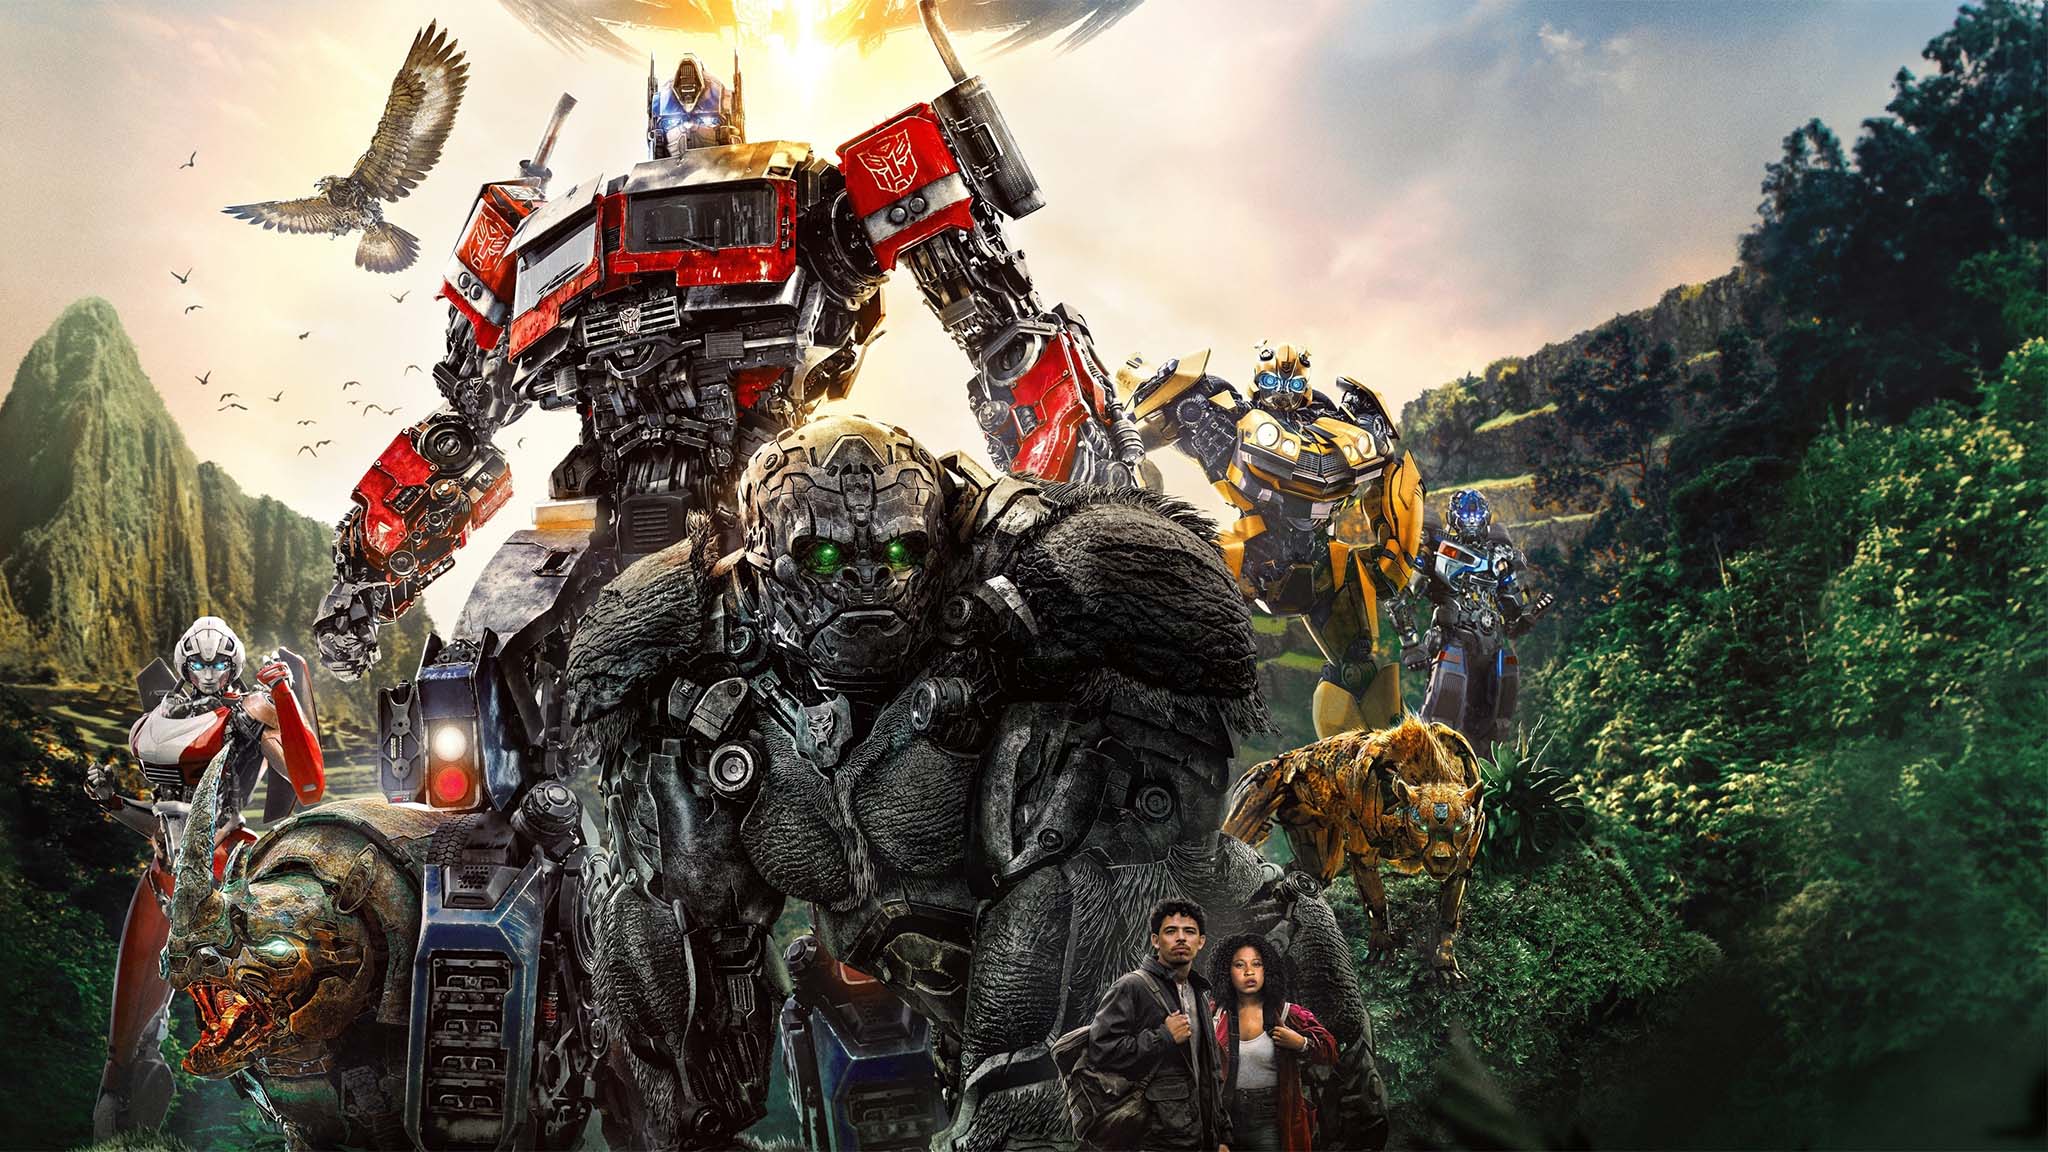 فيلم Transformers: Rise of the Beasts 2023 مترجم